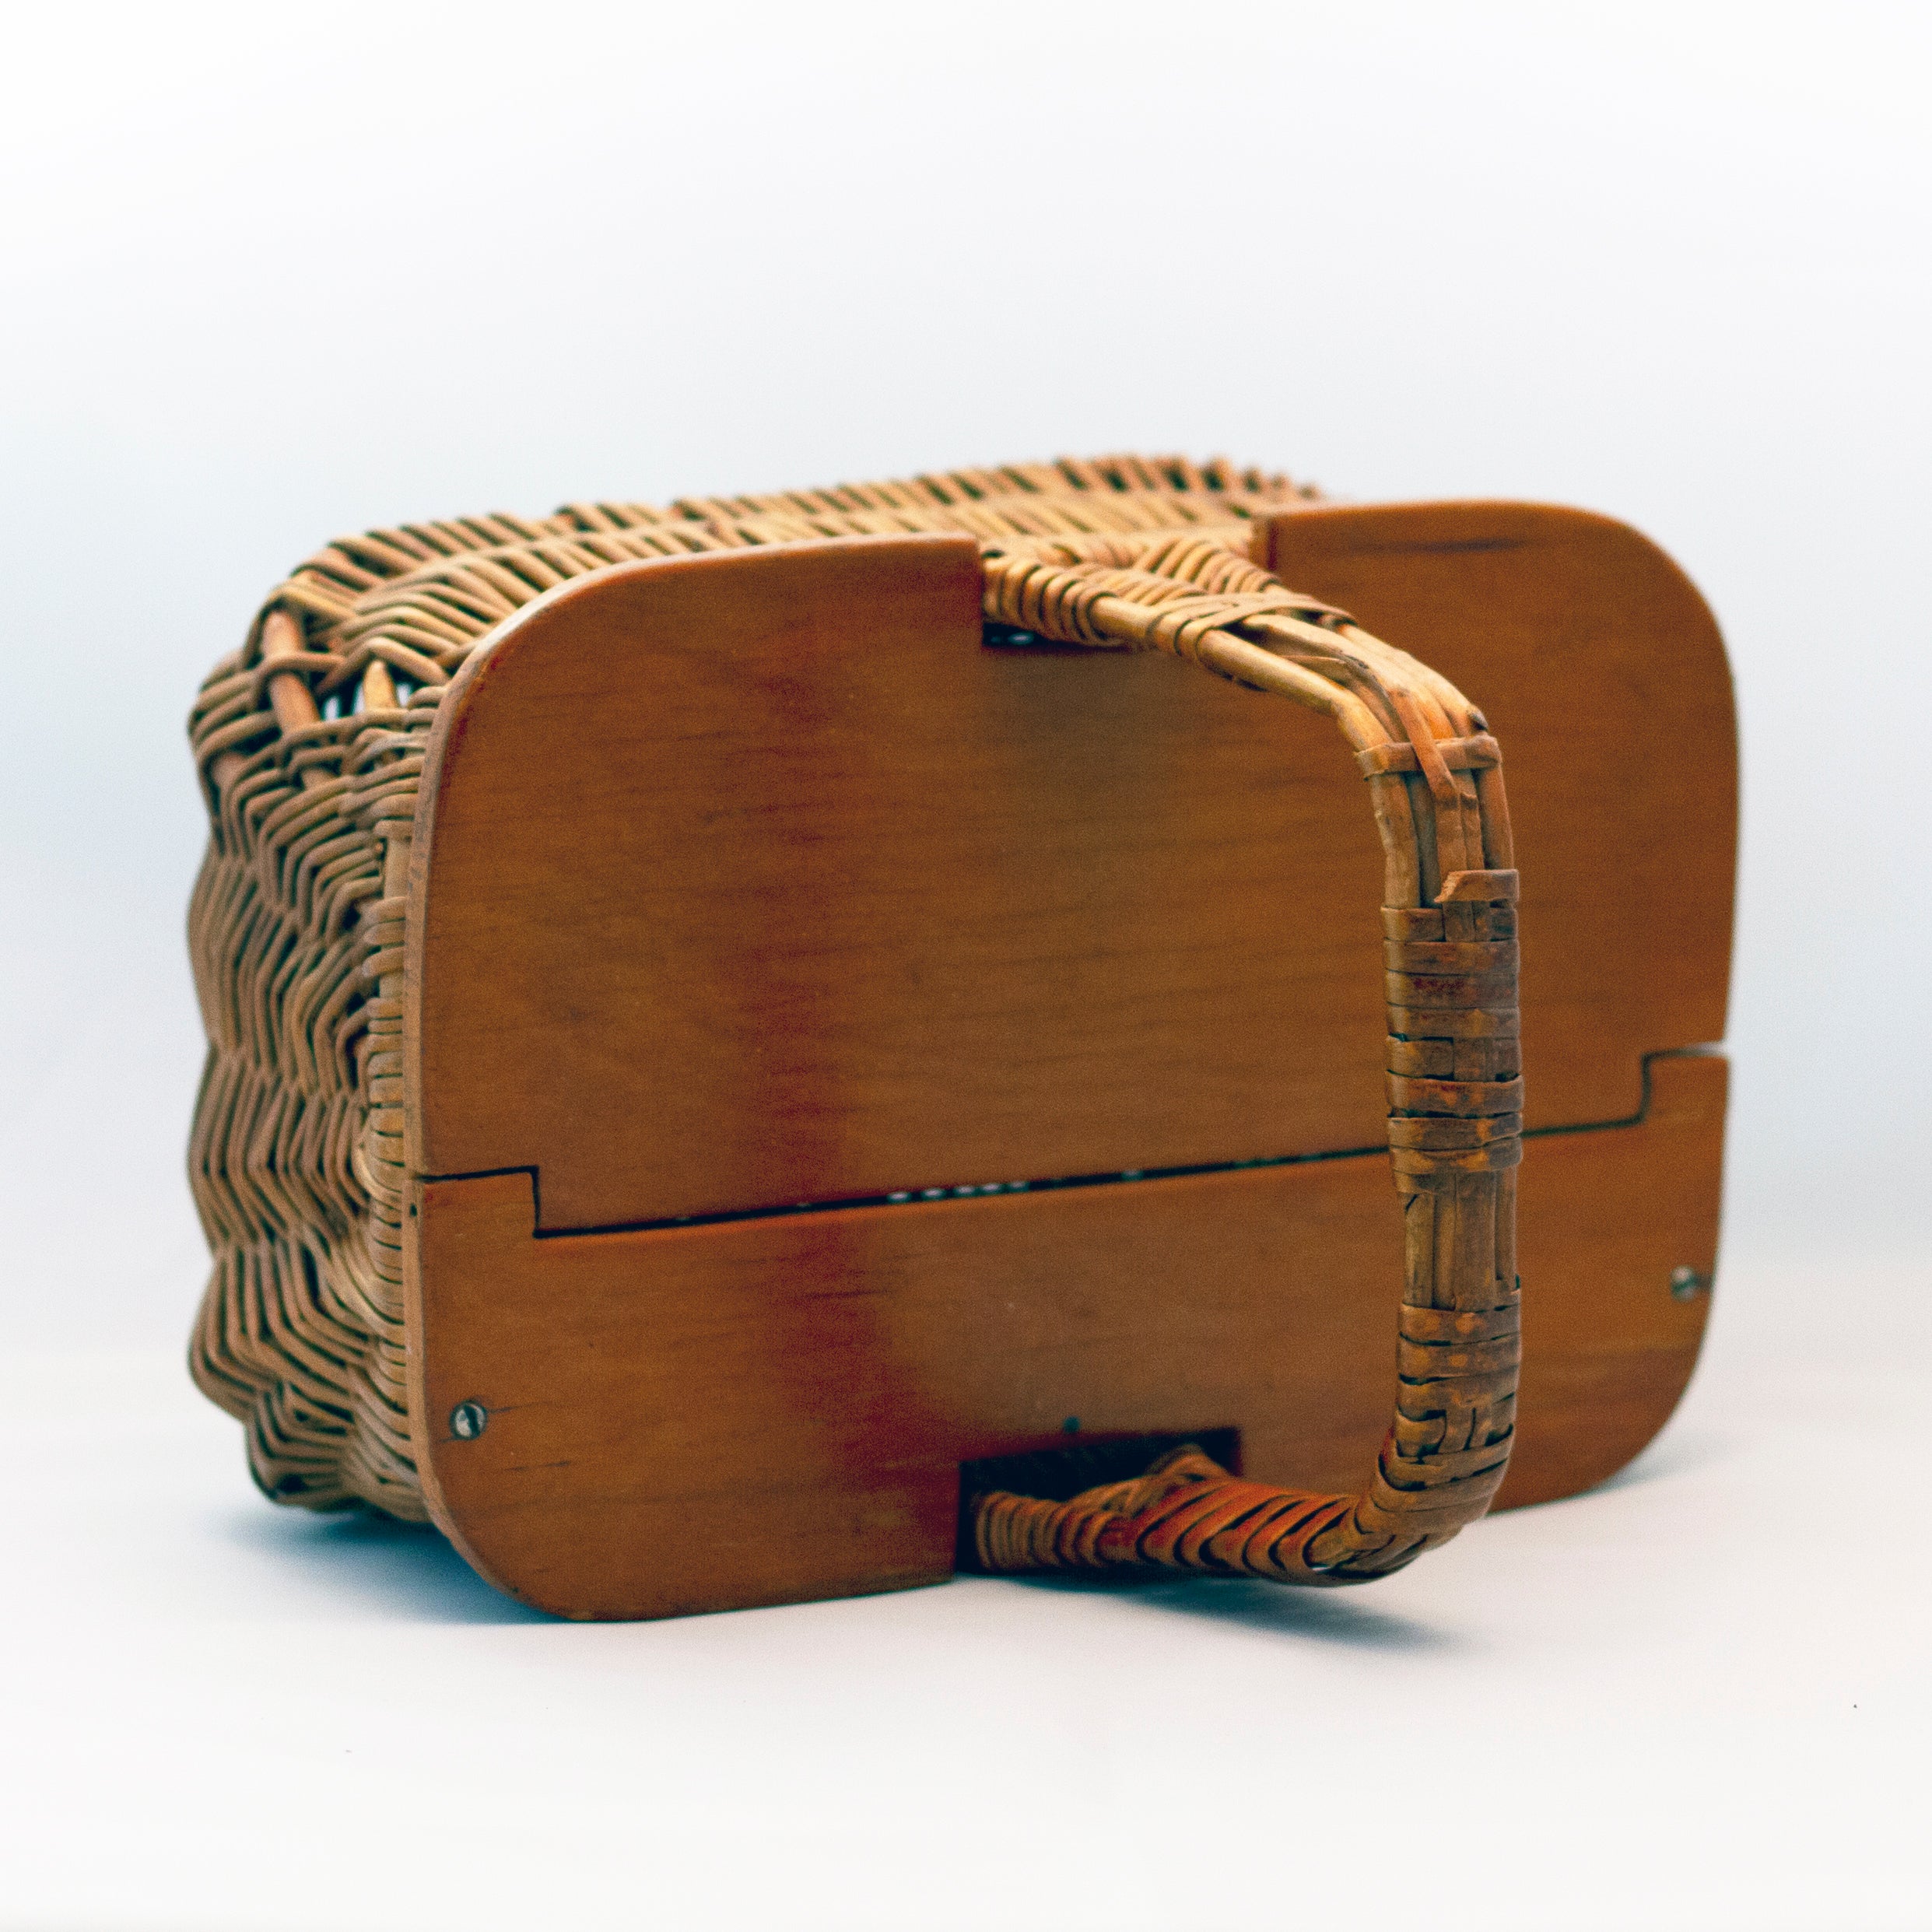 File:Vintage 1960's Handbag Wood Purse Collapsible Bag -  VirginVintage2012.jpg - Wikimedia Commons